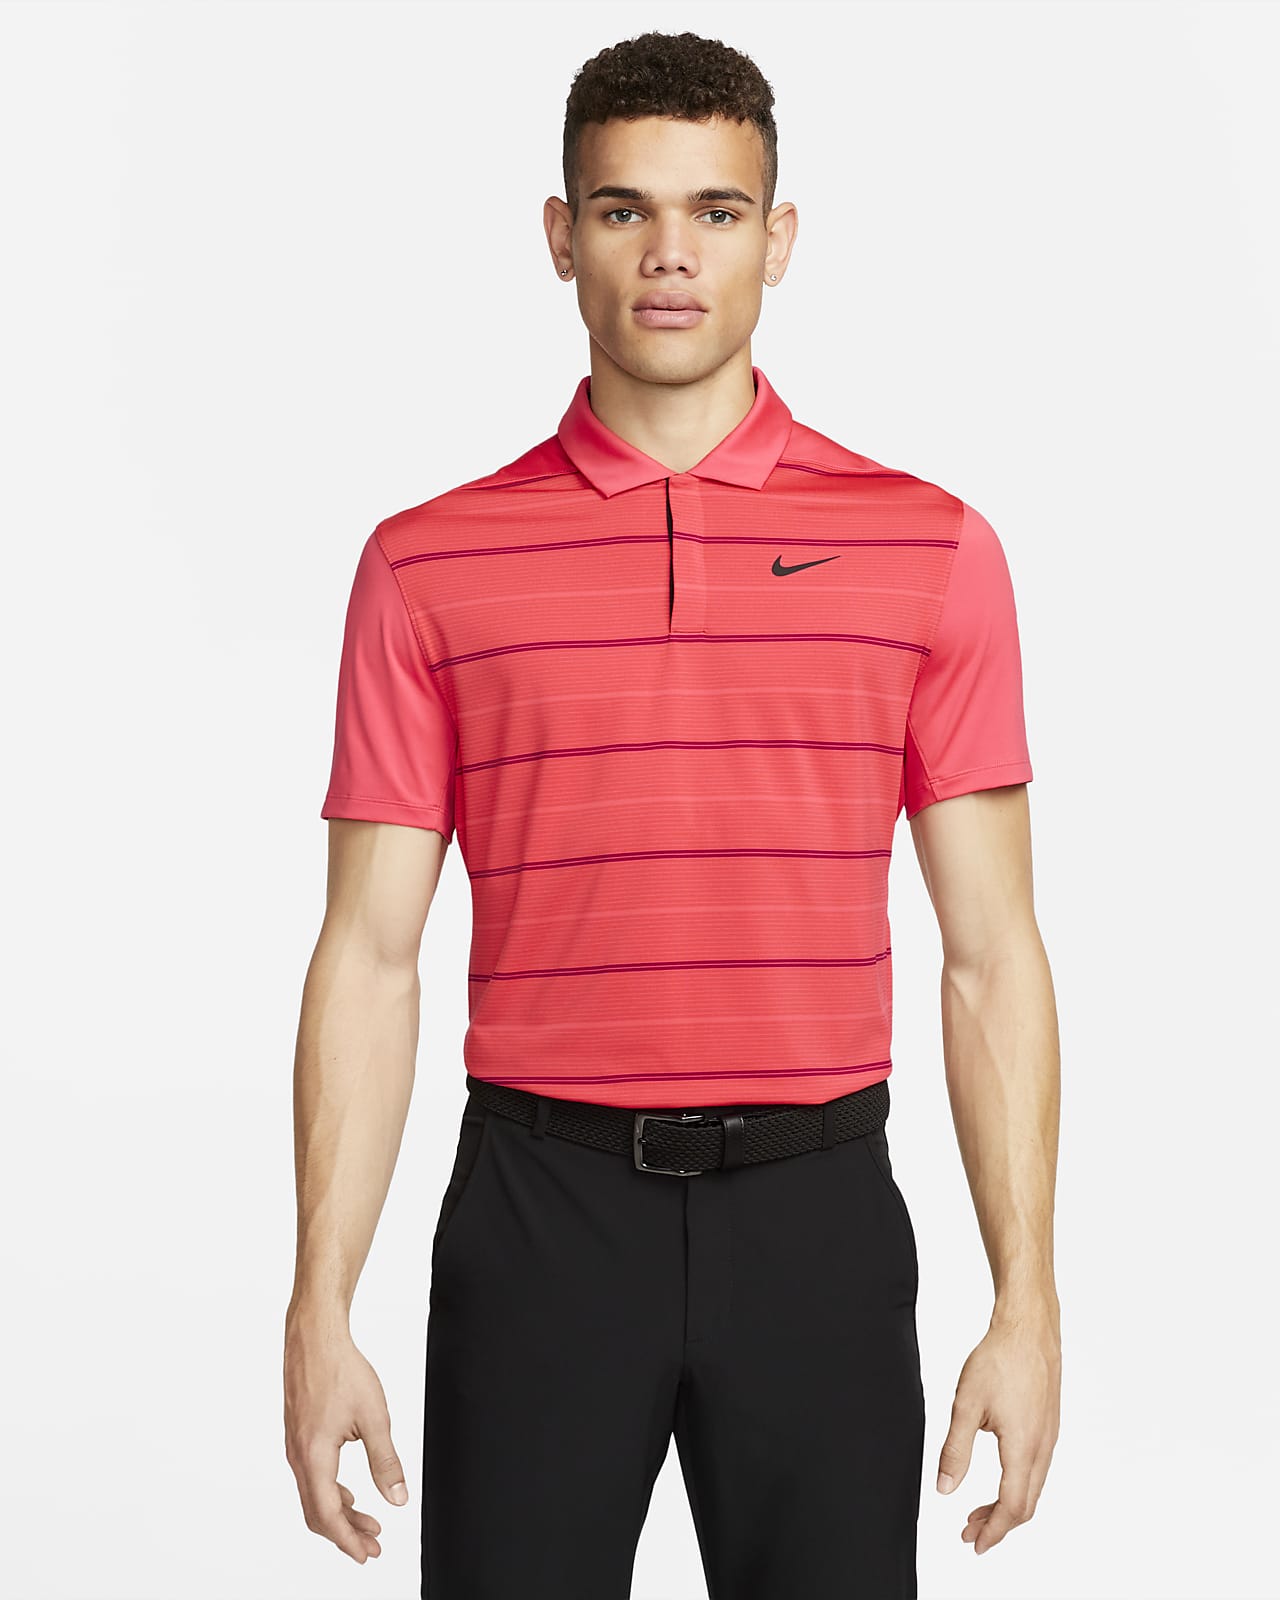 Nike Dri-FIT Tiger Woods Men's Golf Polo.